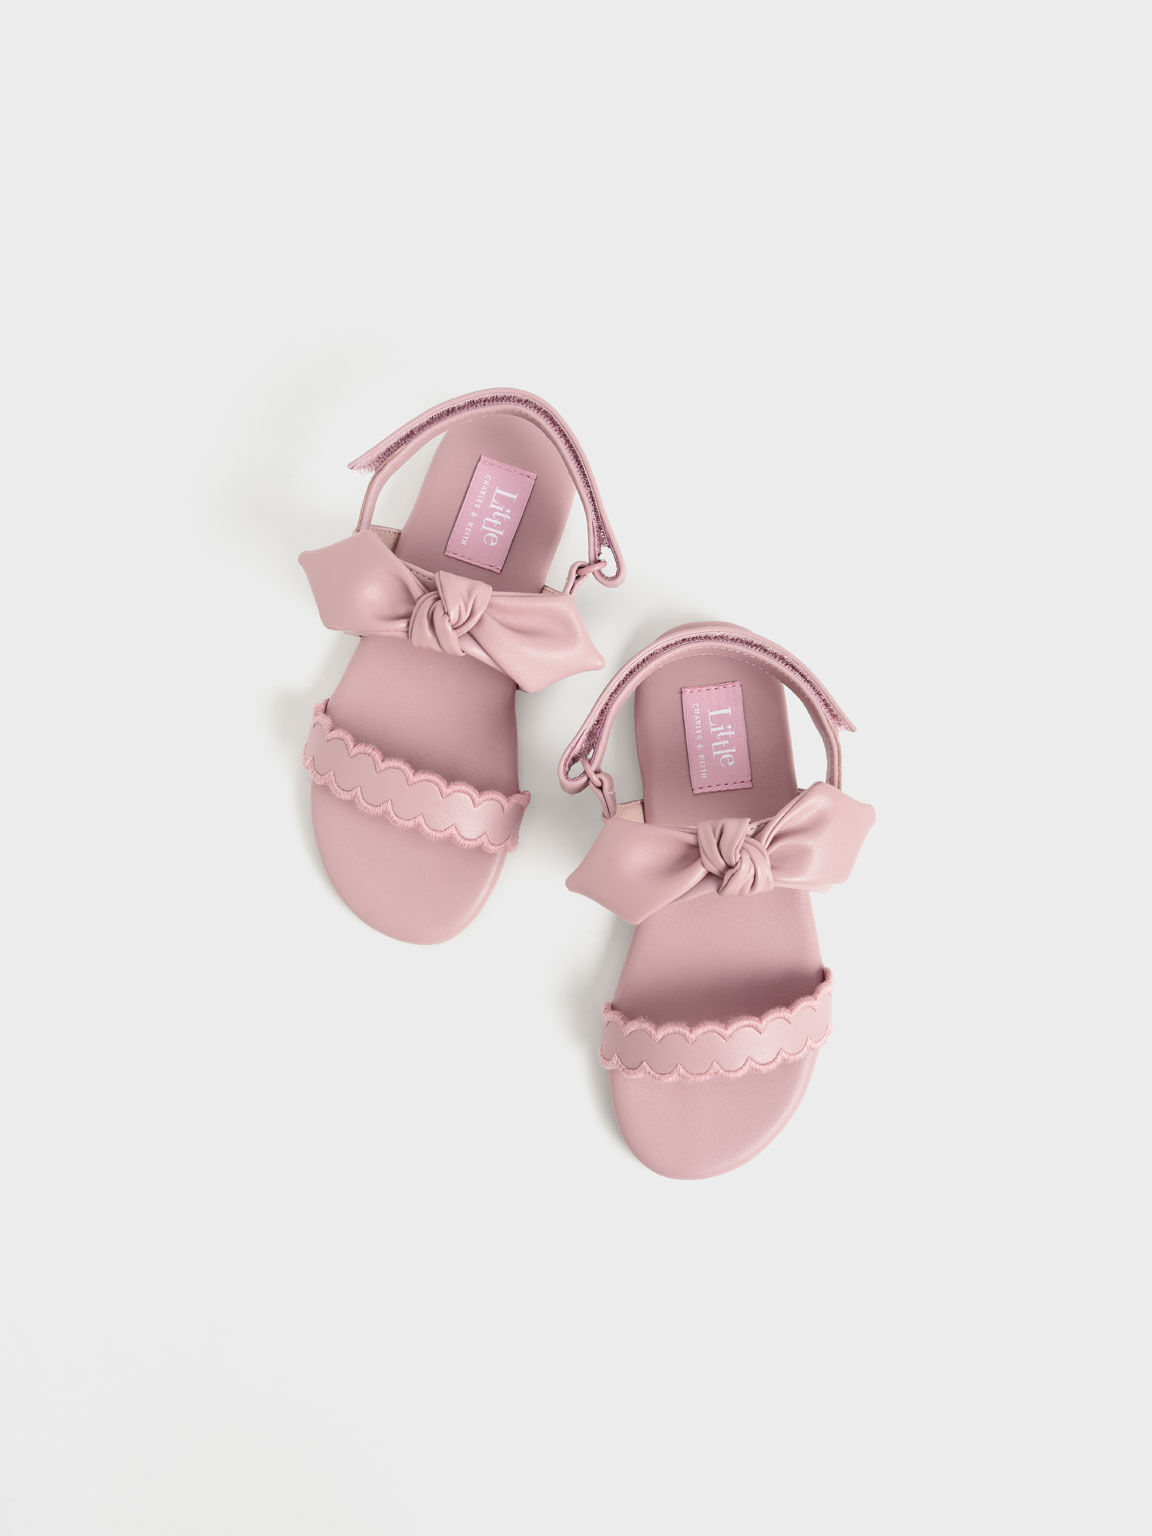 Girls' Bow-Tie Flat Sandals, Pink, hi-res